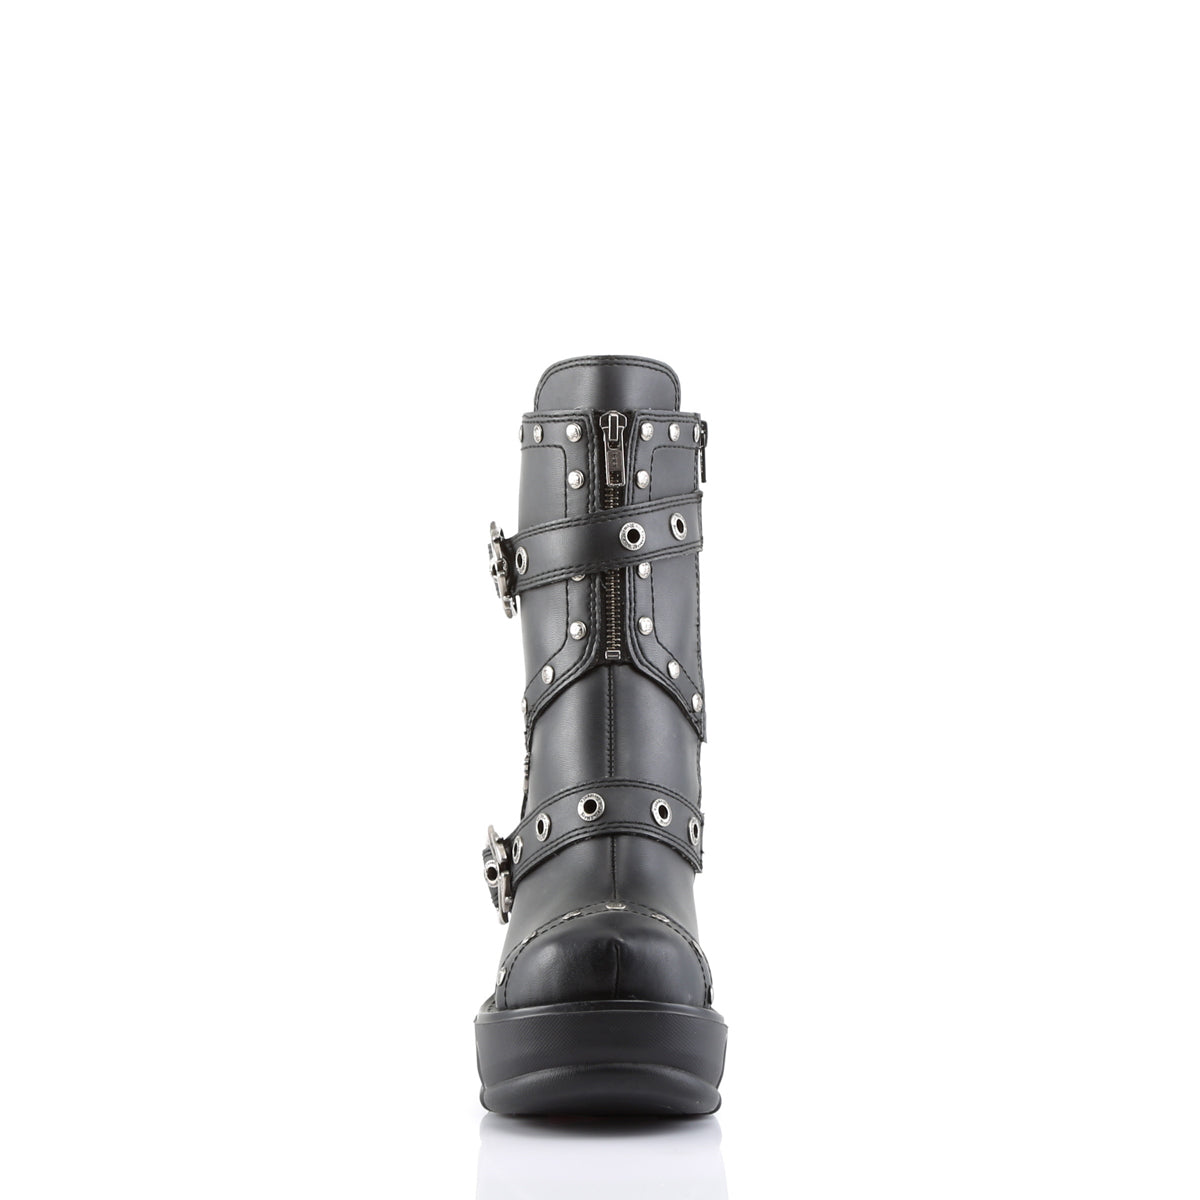 SINISTER-201 Black Vegan Leather Ankle Boot Demonia